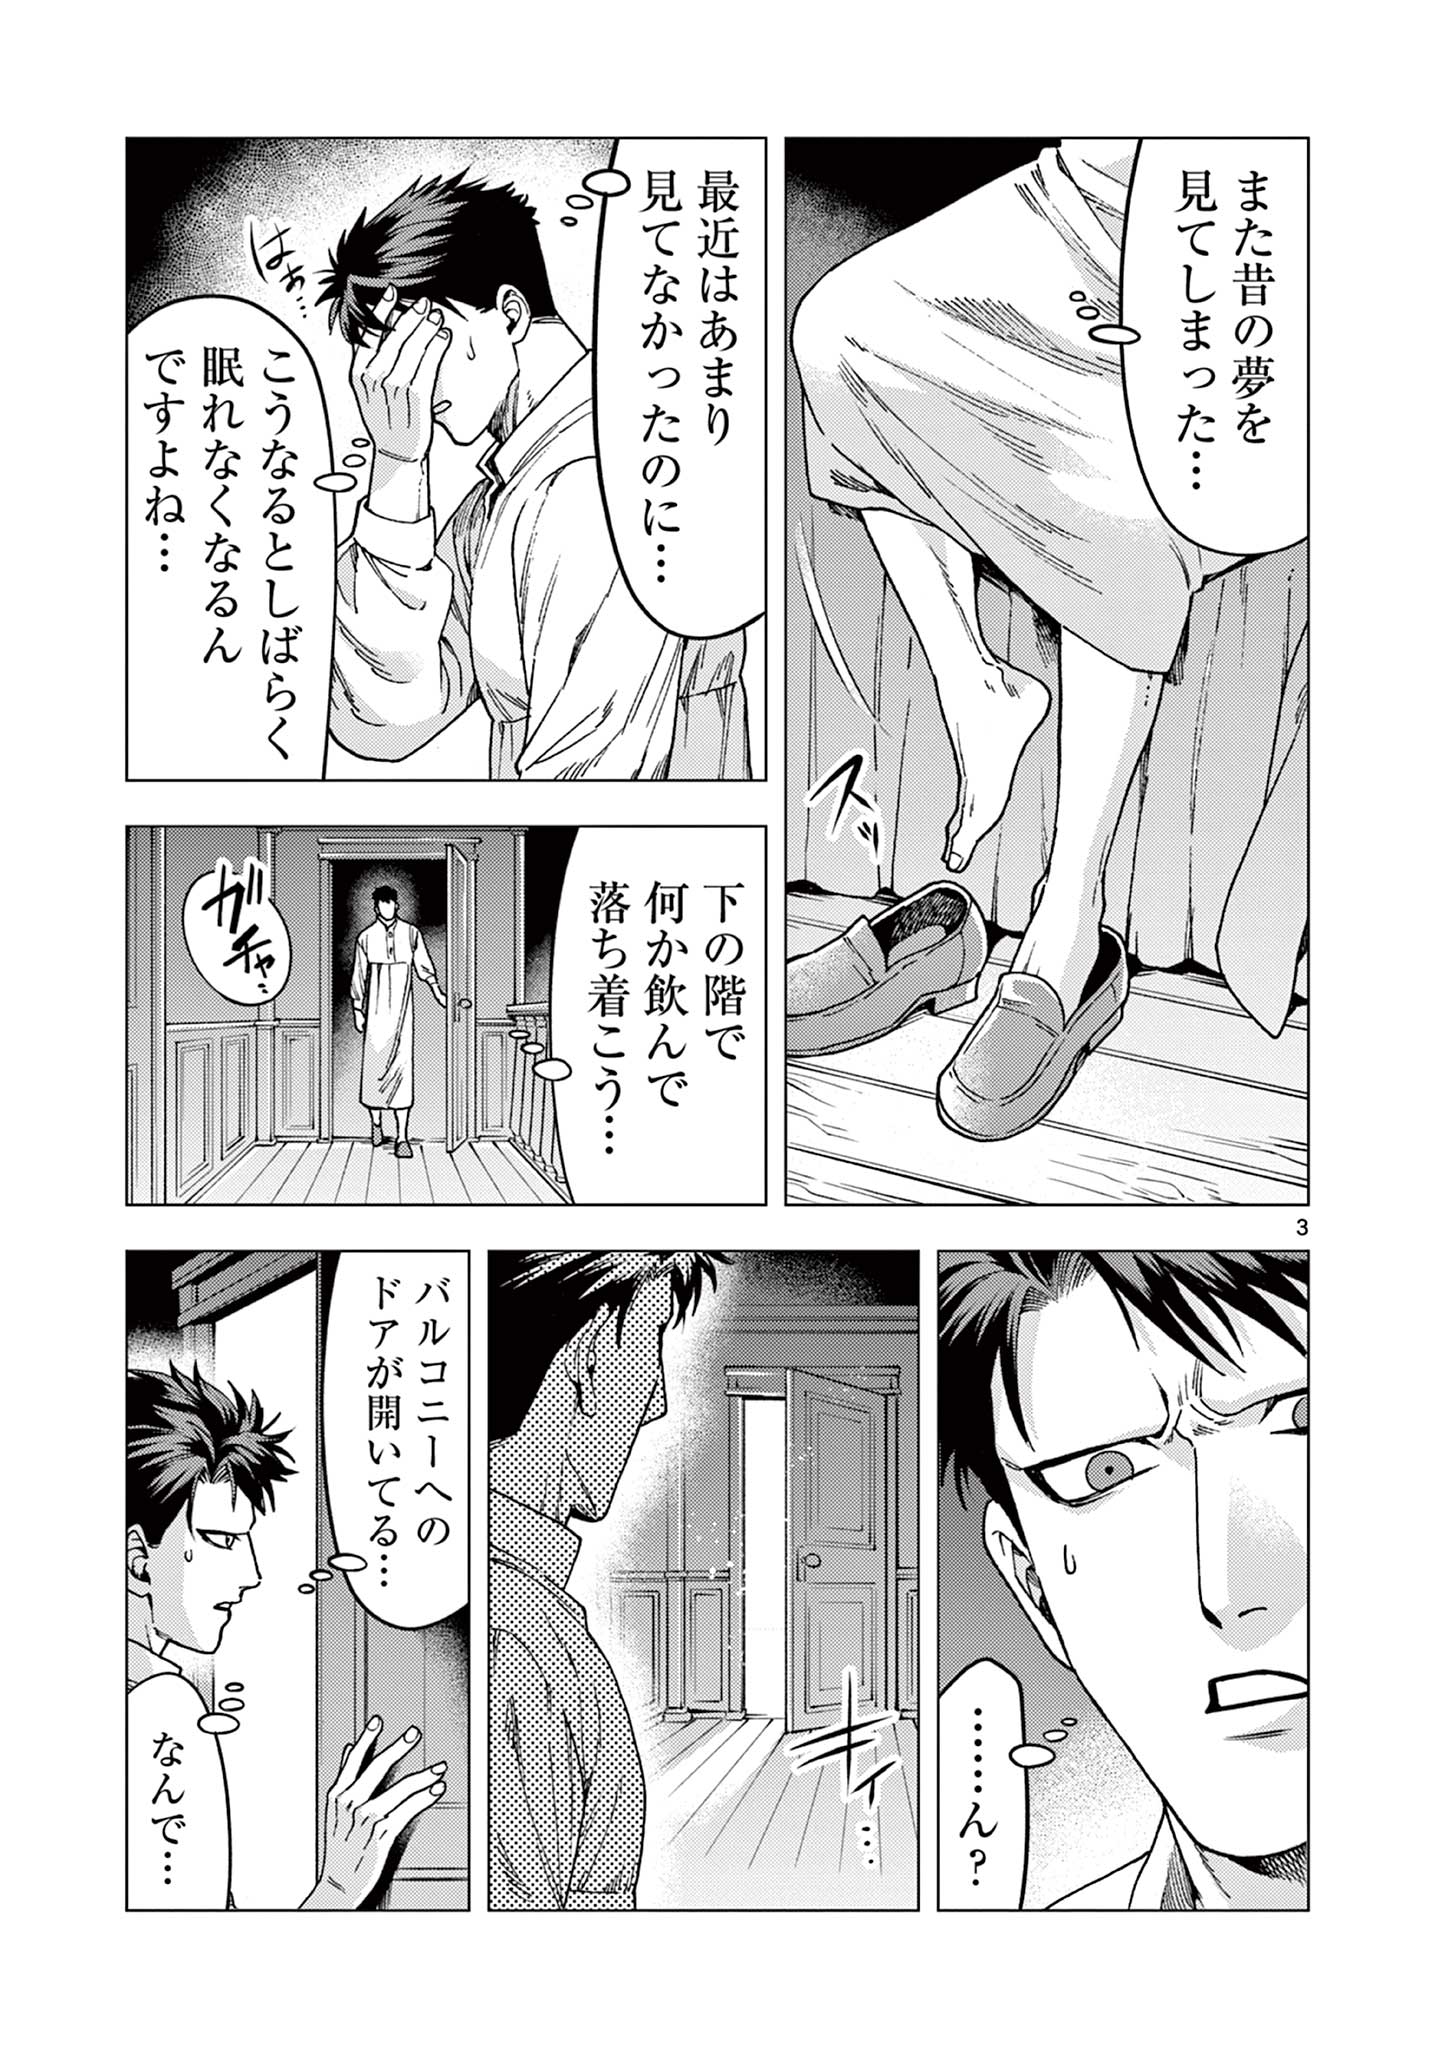 Raul to Kyuuketsuki - Chapter 5 - Page 3